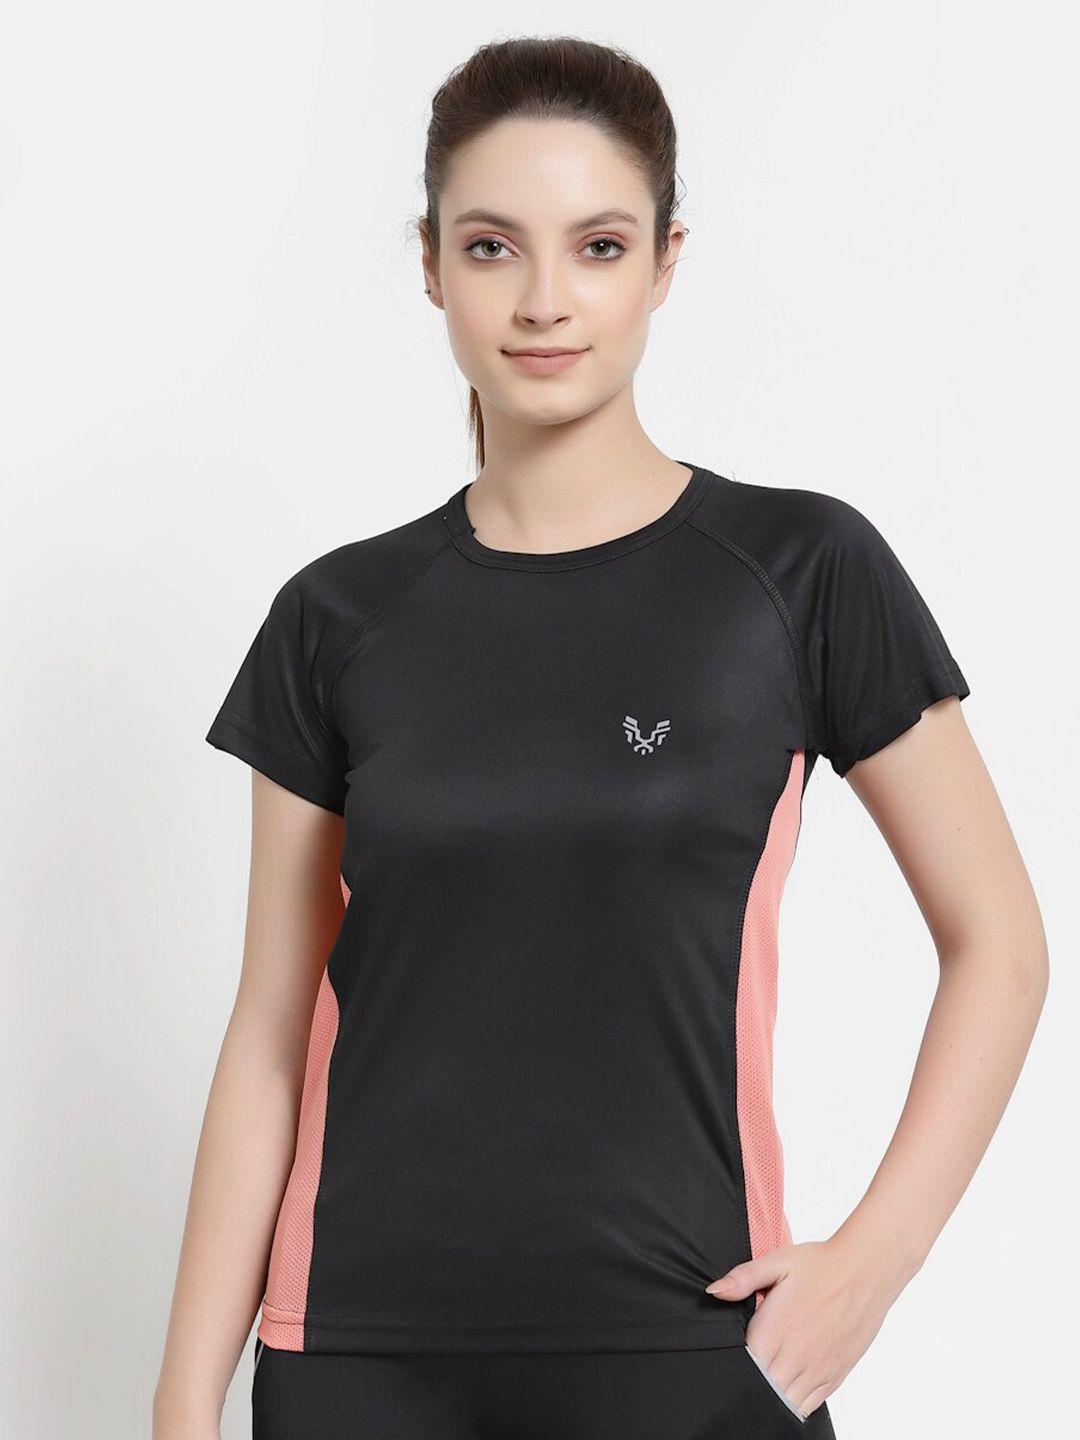 uzarus raglan sleeves dry fit technology sports t-shirt